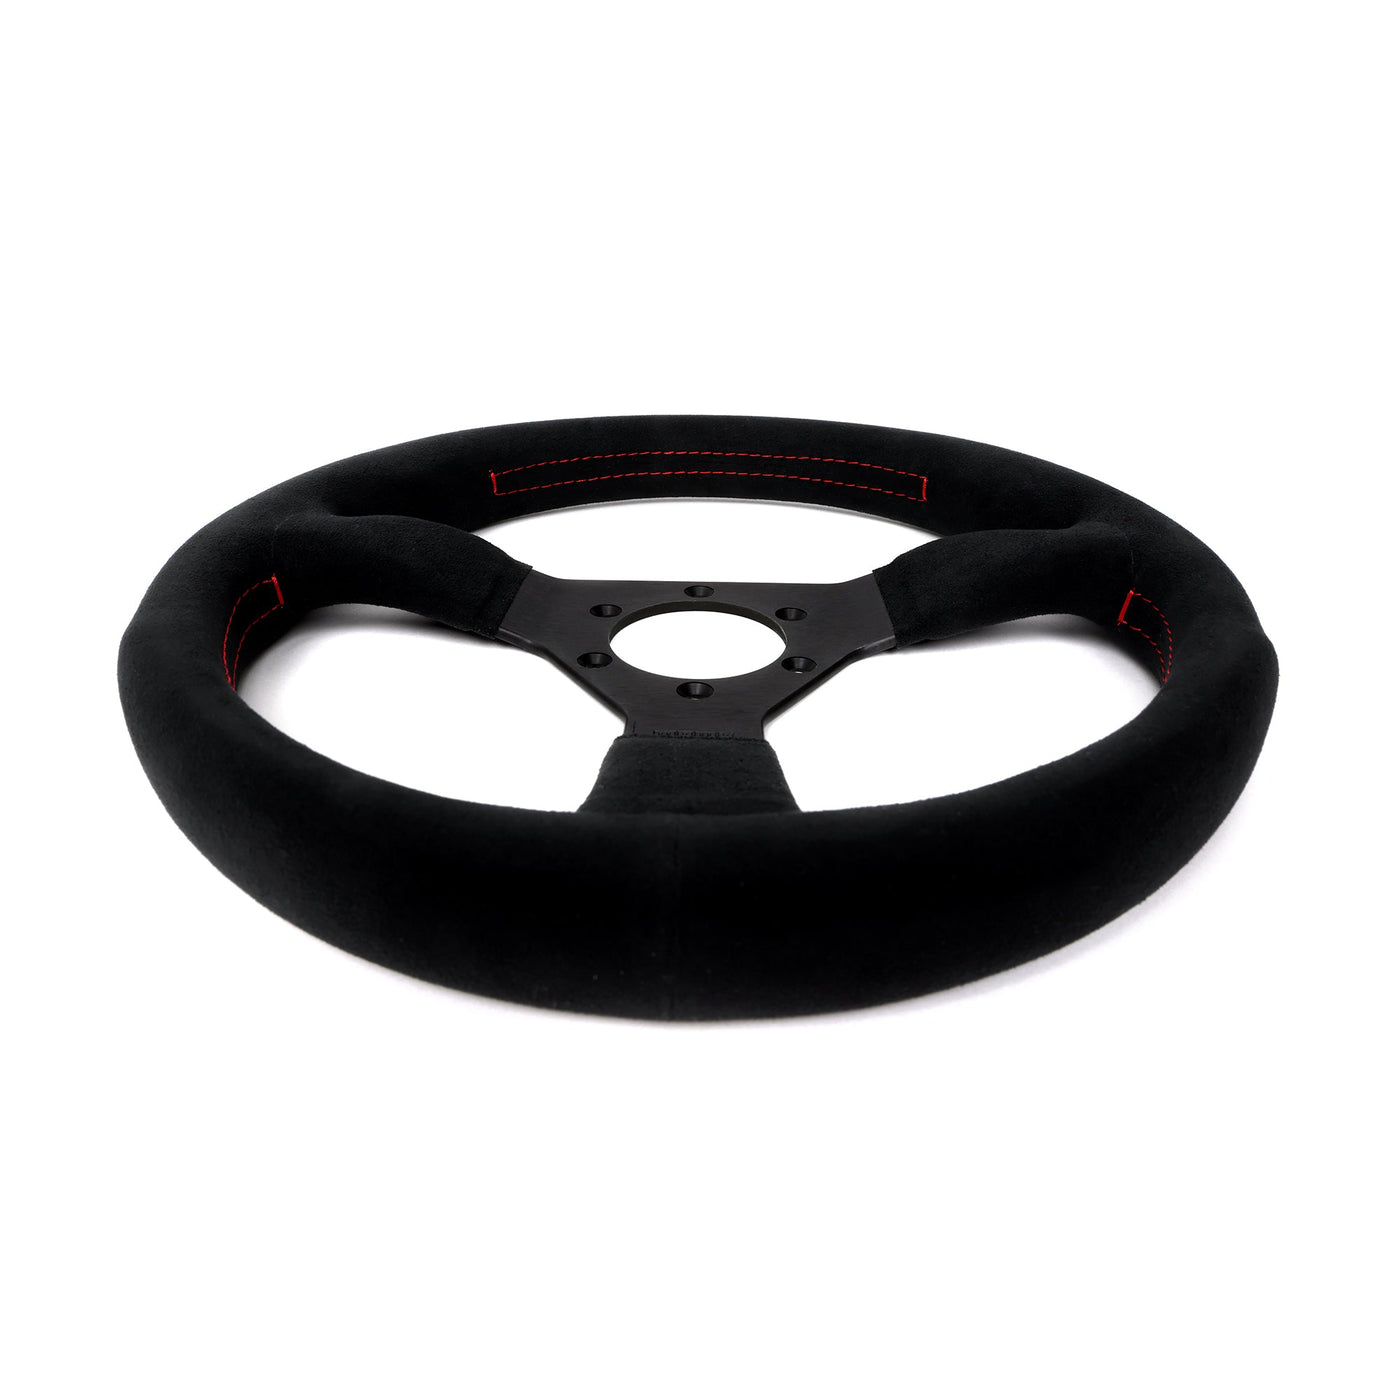 Momo Montecarlo Alcantara Steering Wheel 320 mm - Black/Red Stitch/Black Spokes MOM-MCL-32AL3B